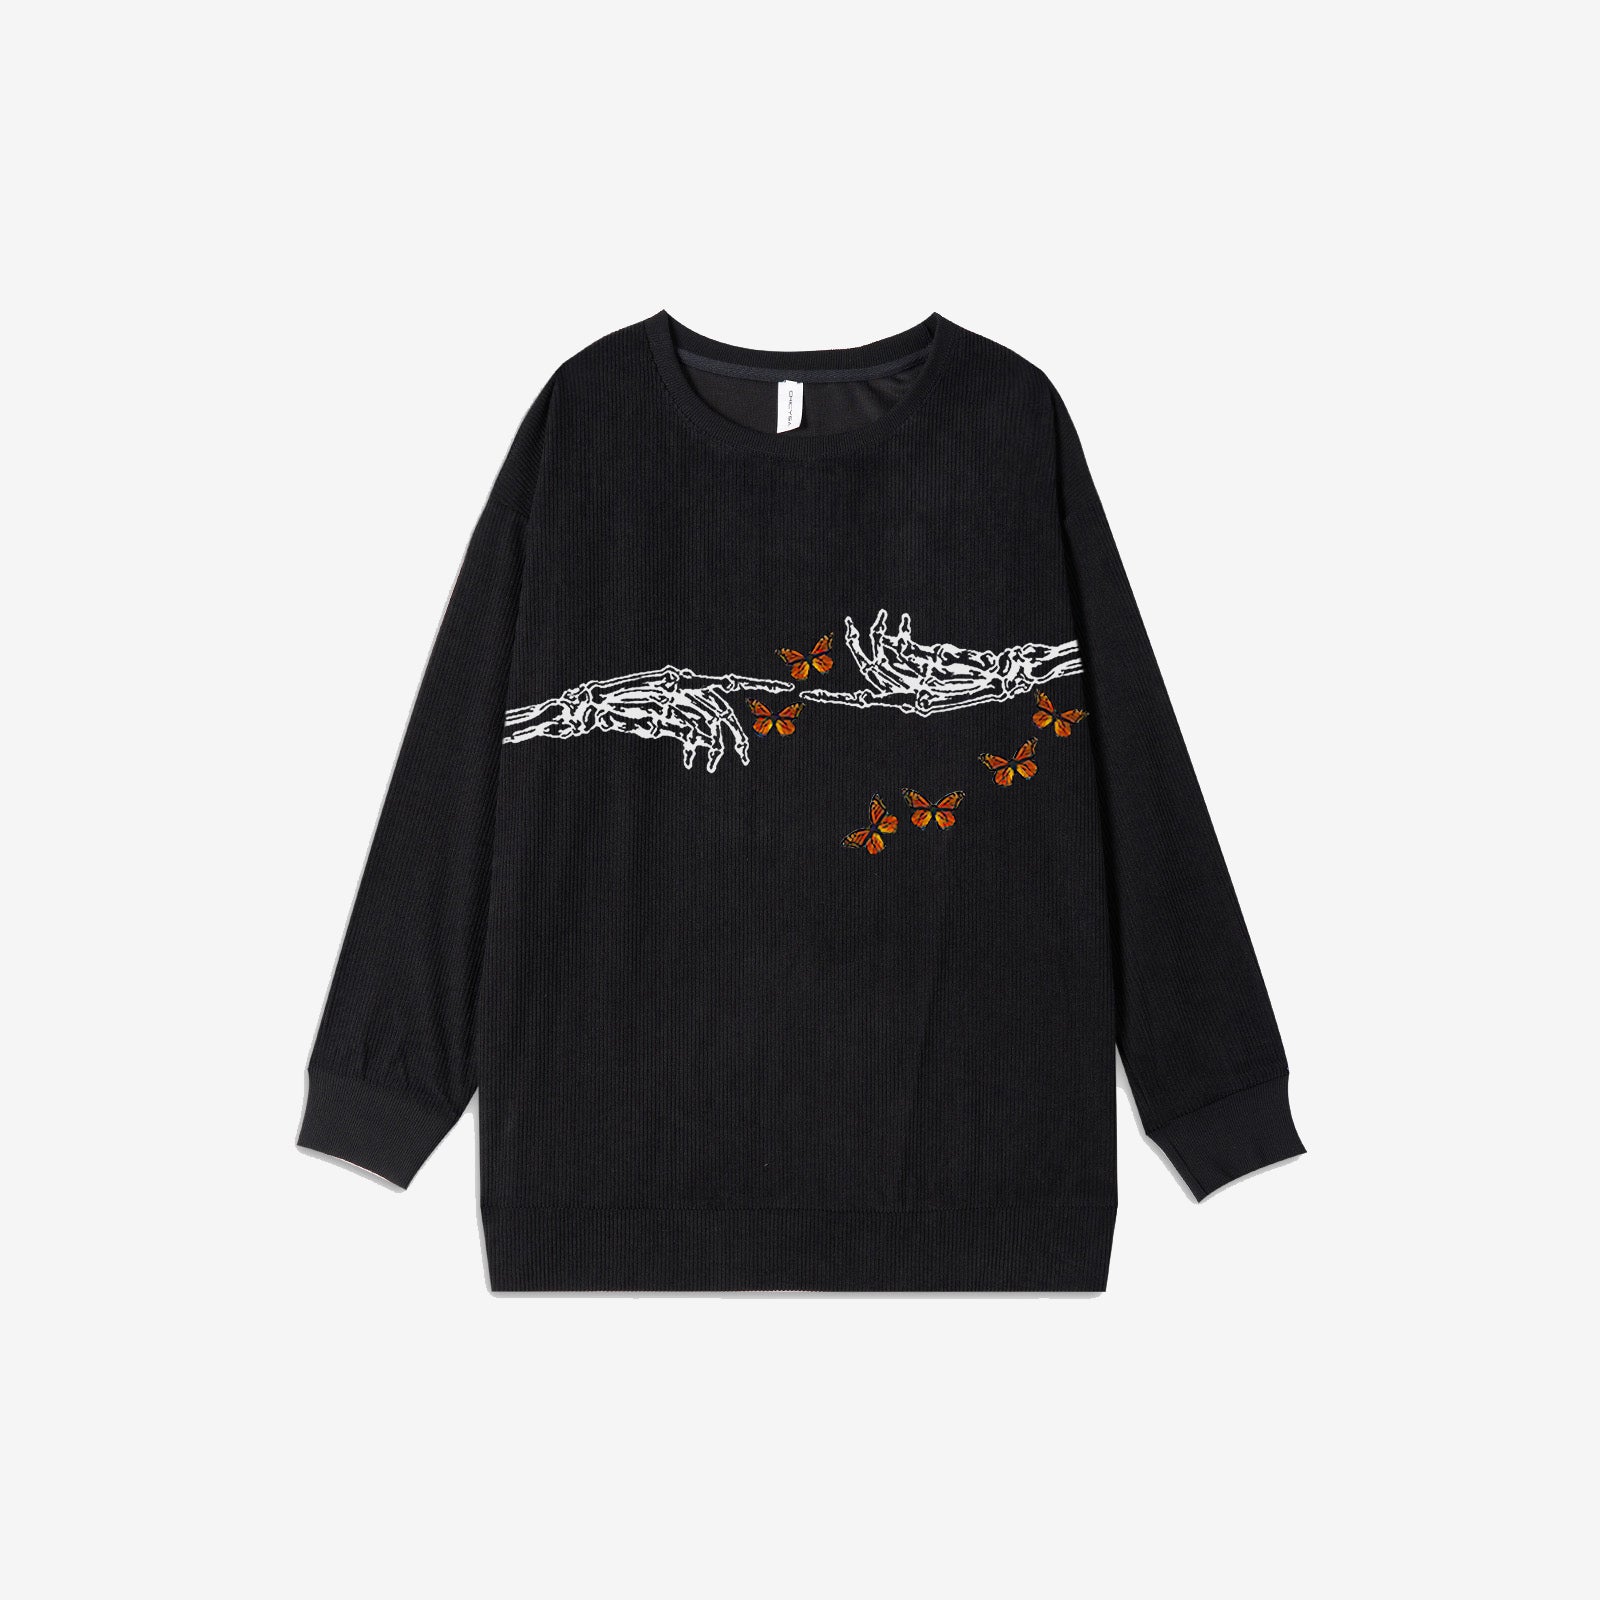 Minnieskull Cool Fashion Butterfly Bone Claws Print Designer Sweatshirt